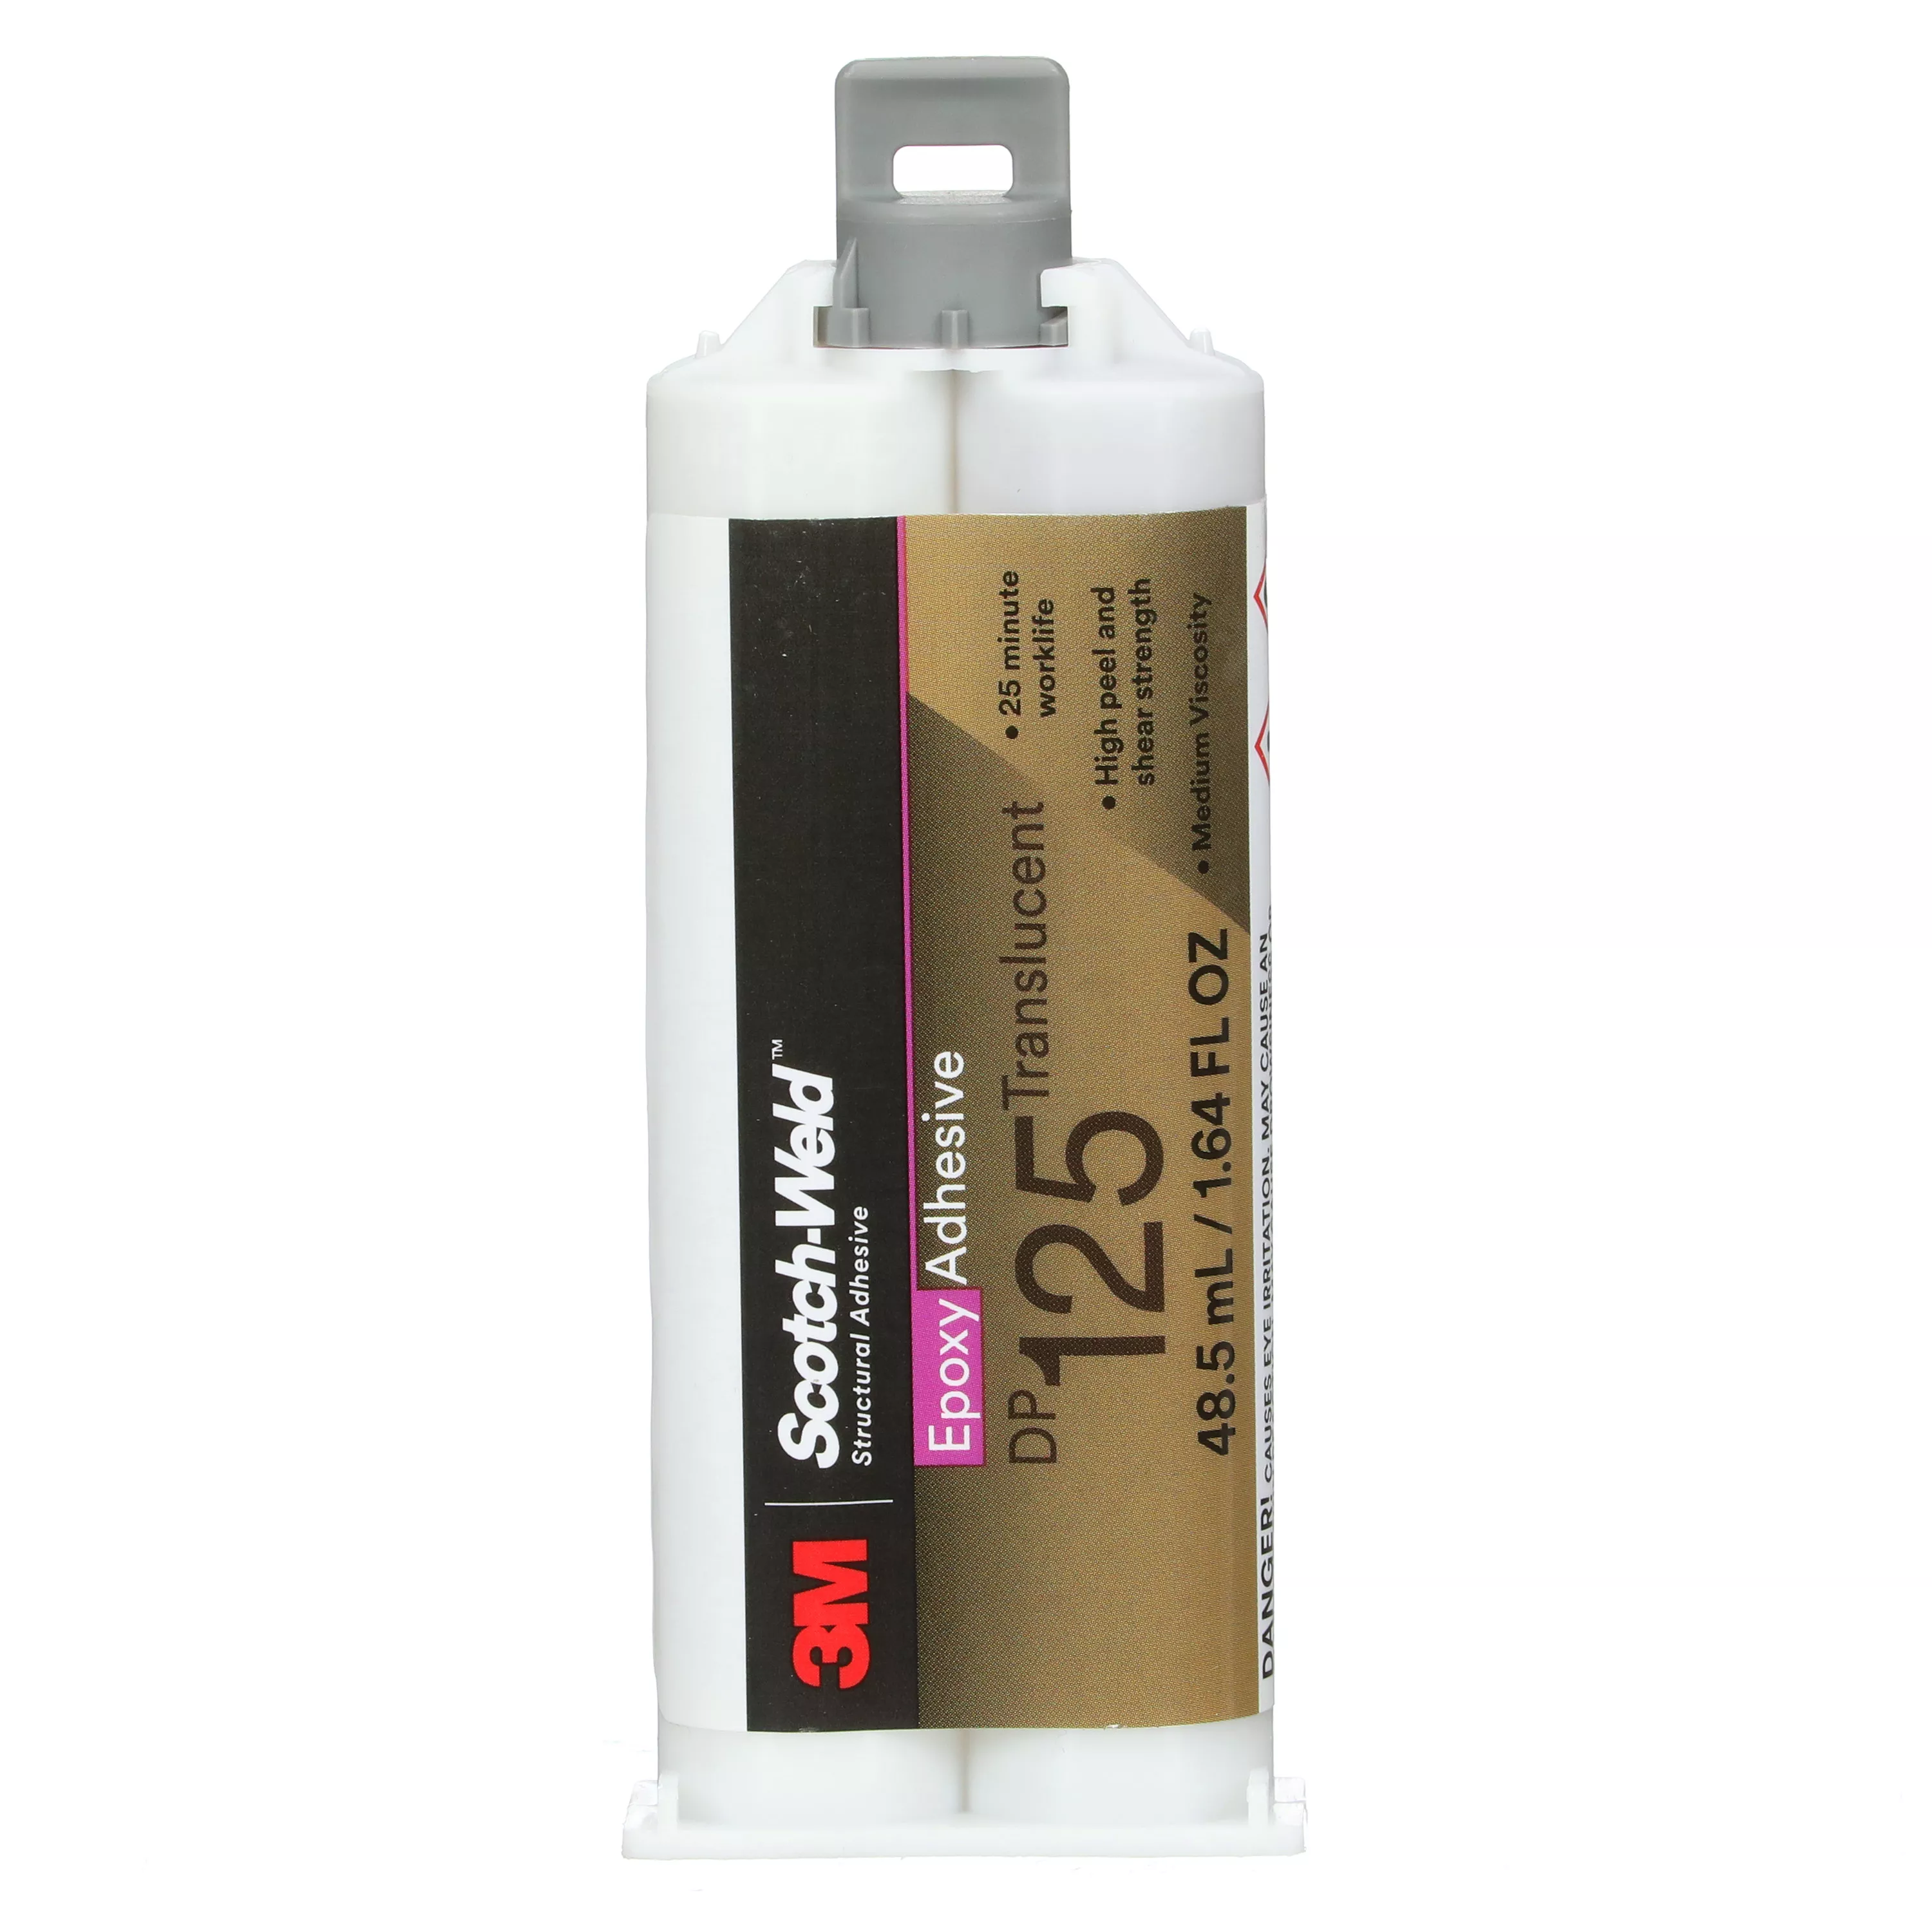 3M™ Scotch-Weld™ Epoxy Adhesive DP125, Translucent, 48.5mL Duo-Pak,
12/Case